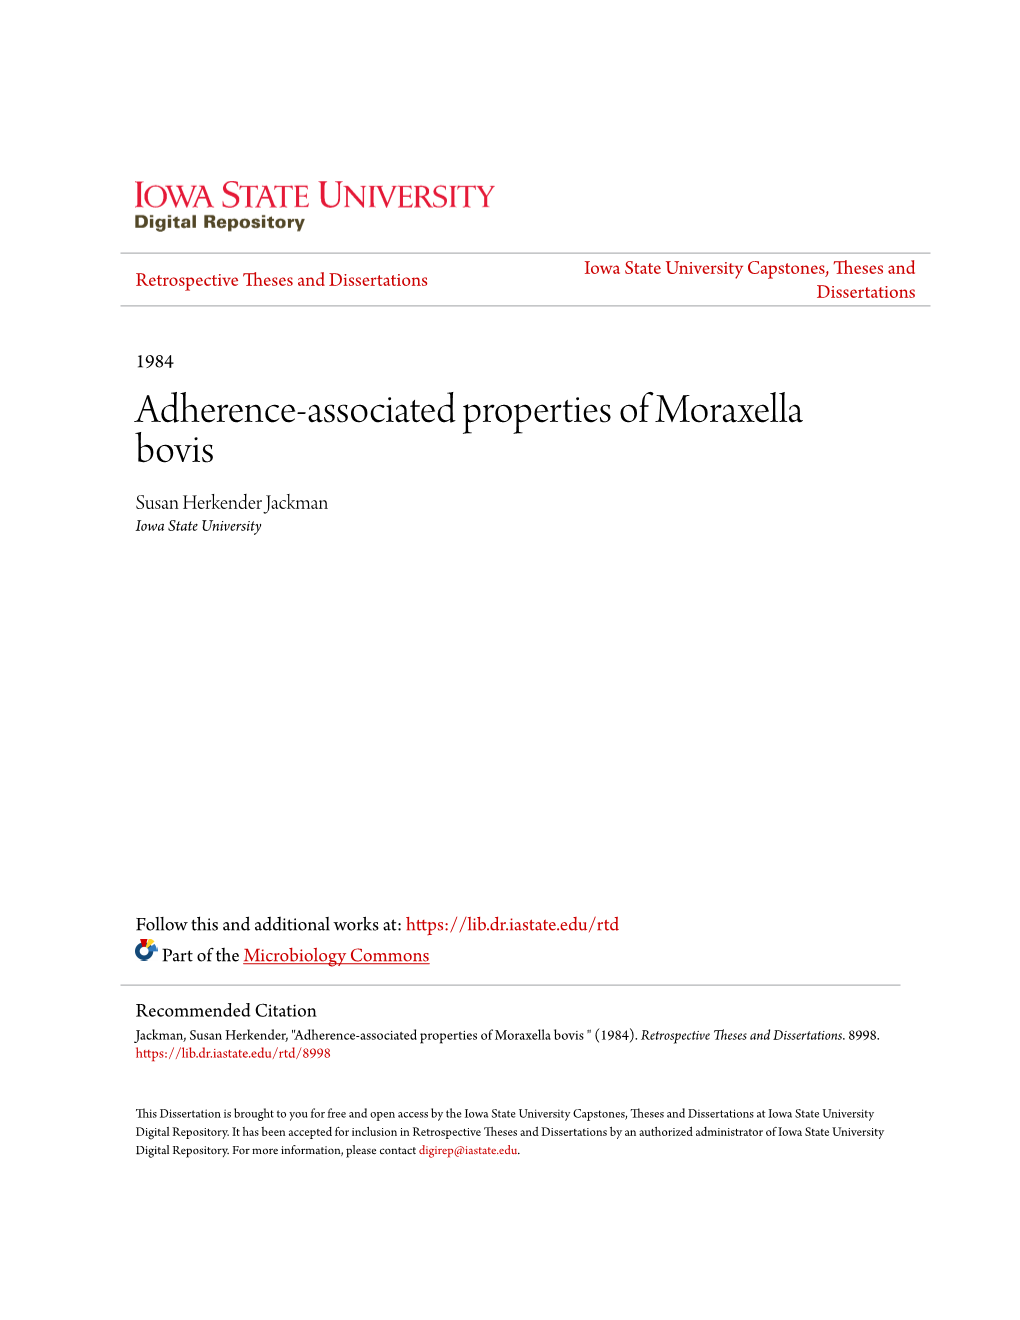 Adherence-Associated Properties of Moraxella Bovis Susan Herkender Jackman Iowa State University